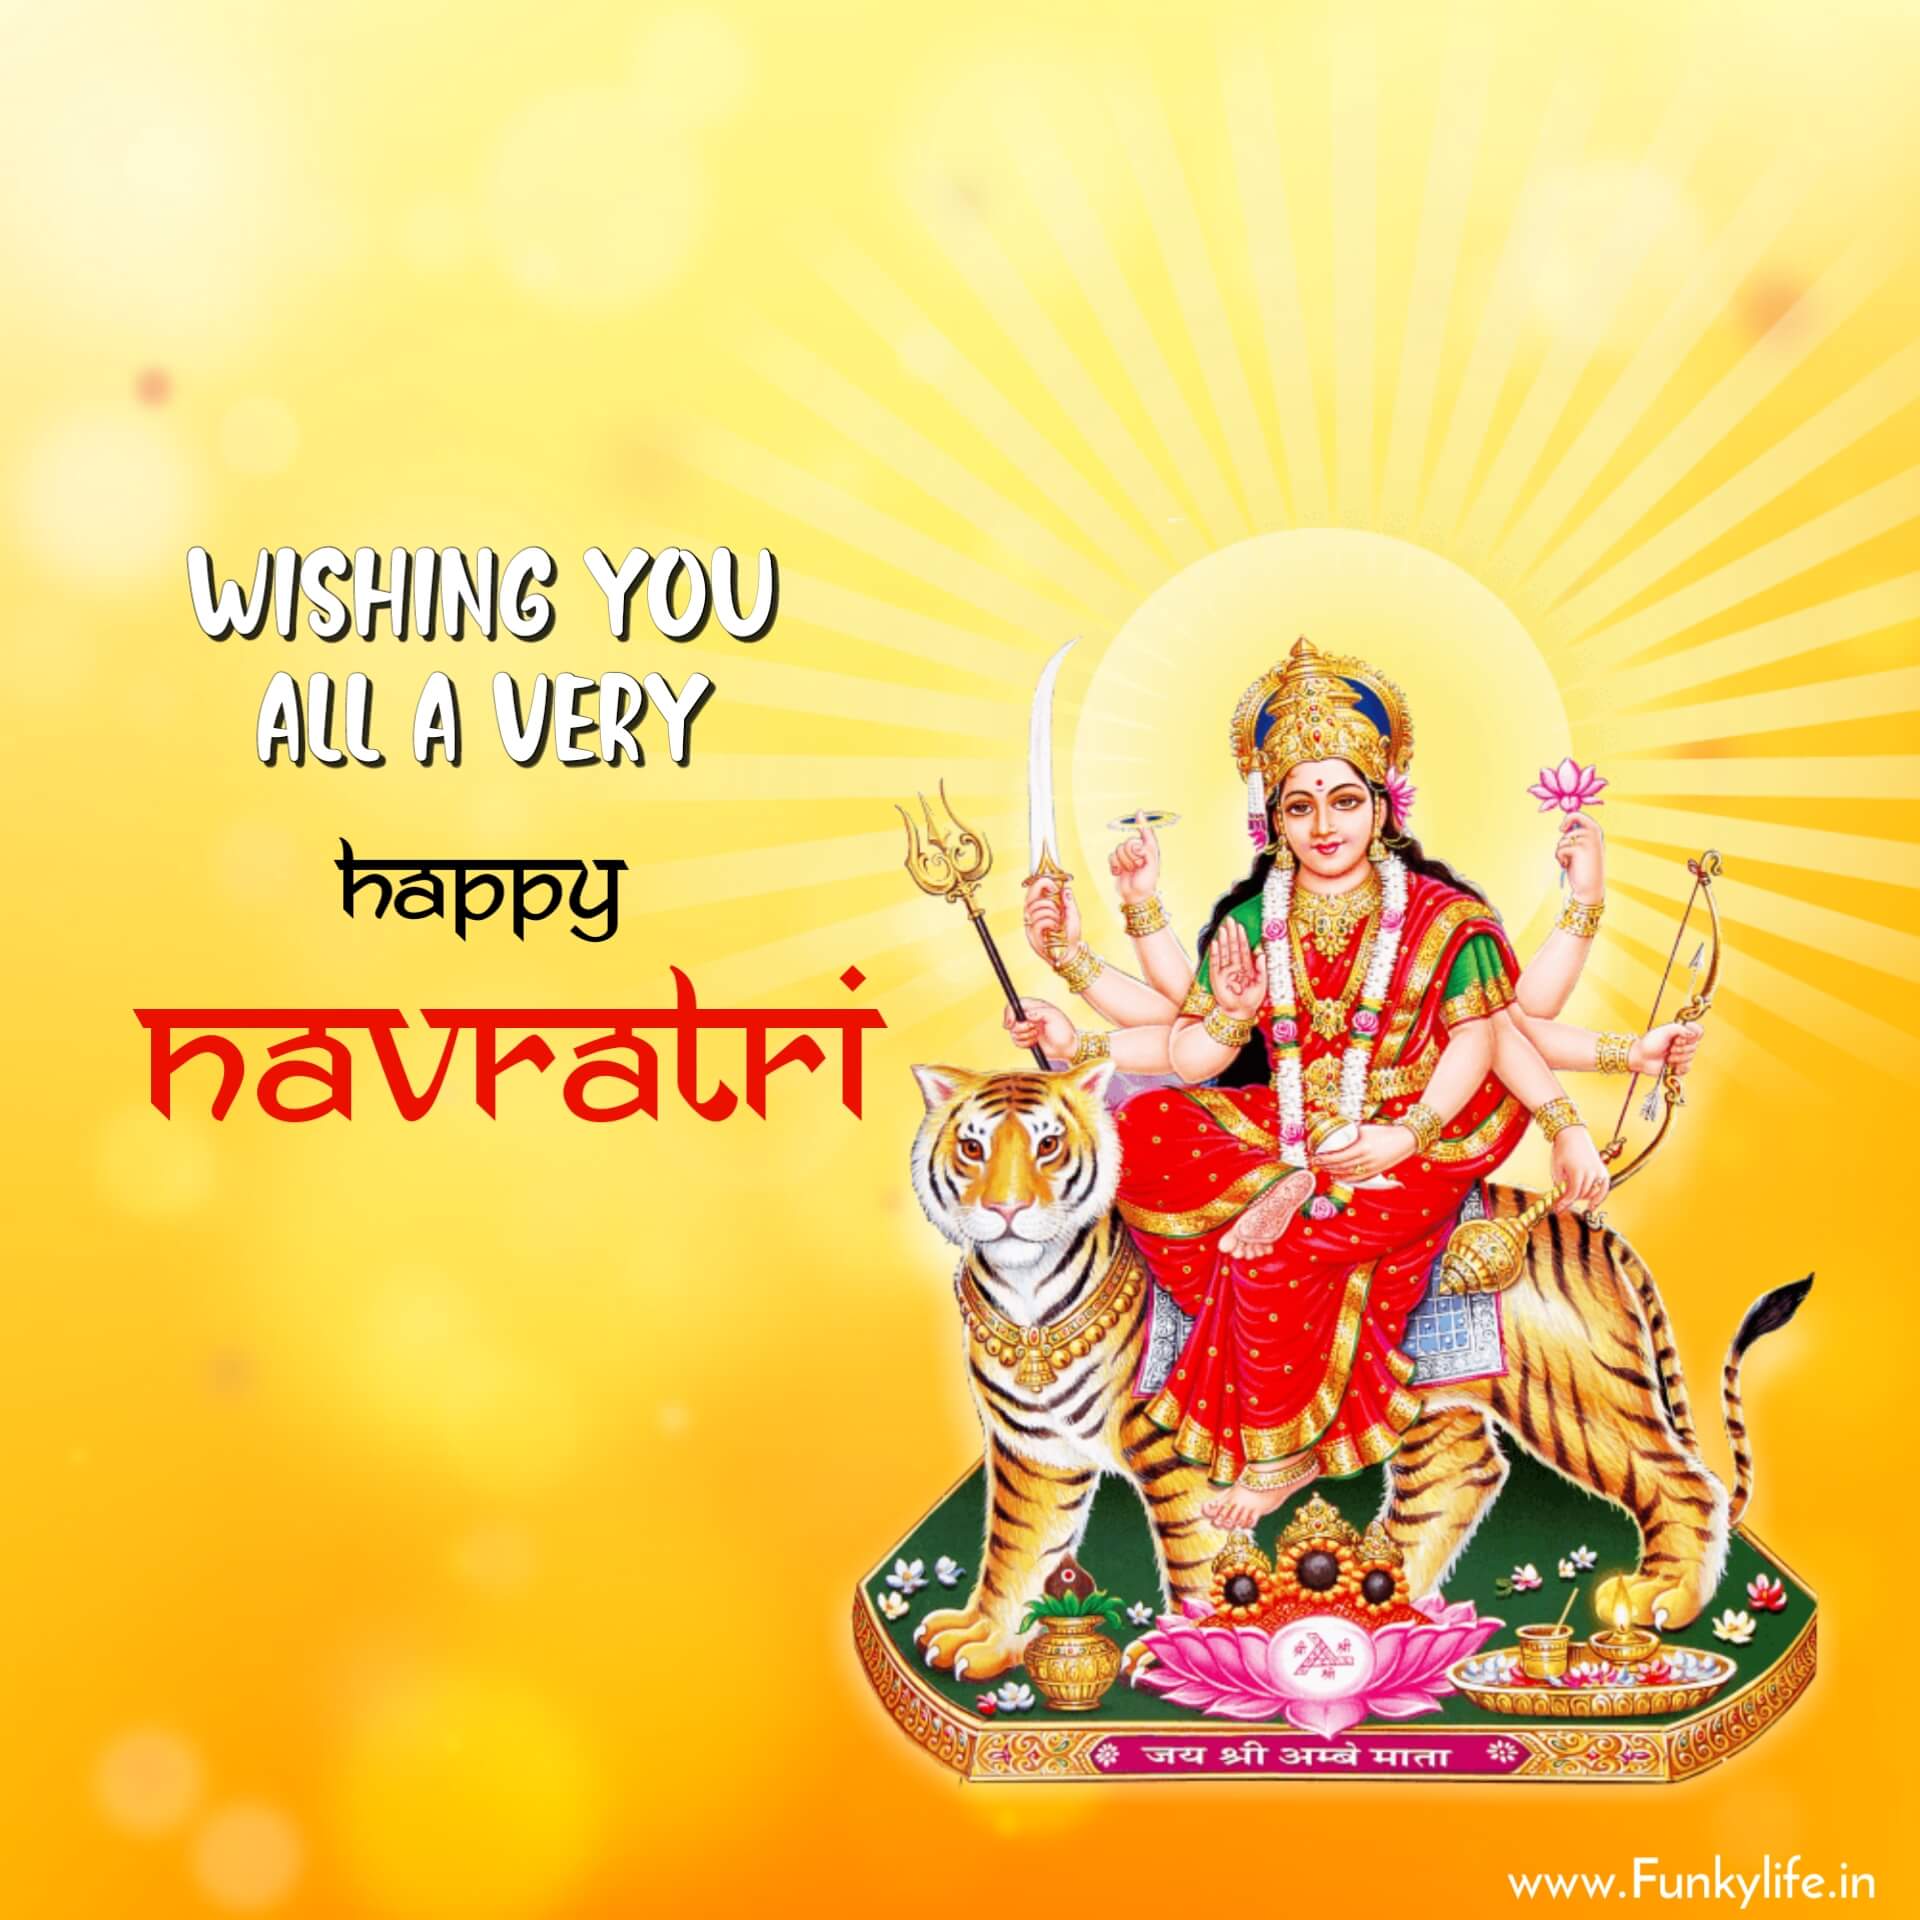 WhatsApp Happy Navratri Images